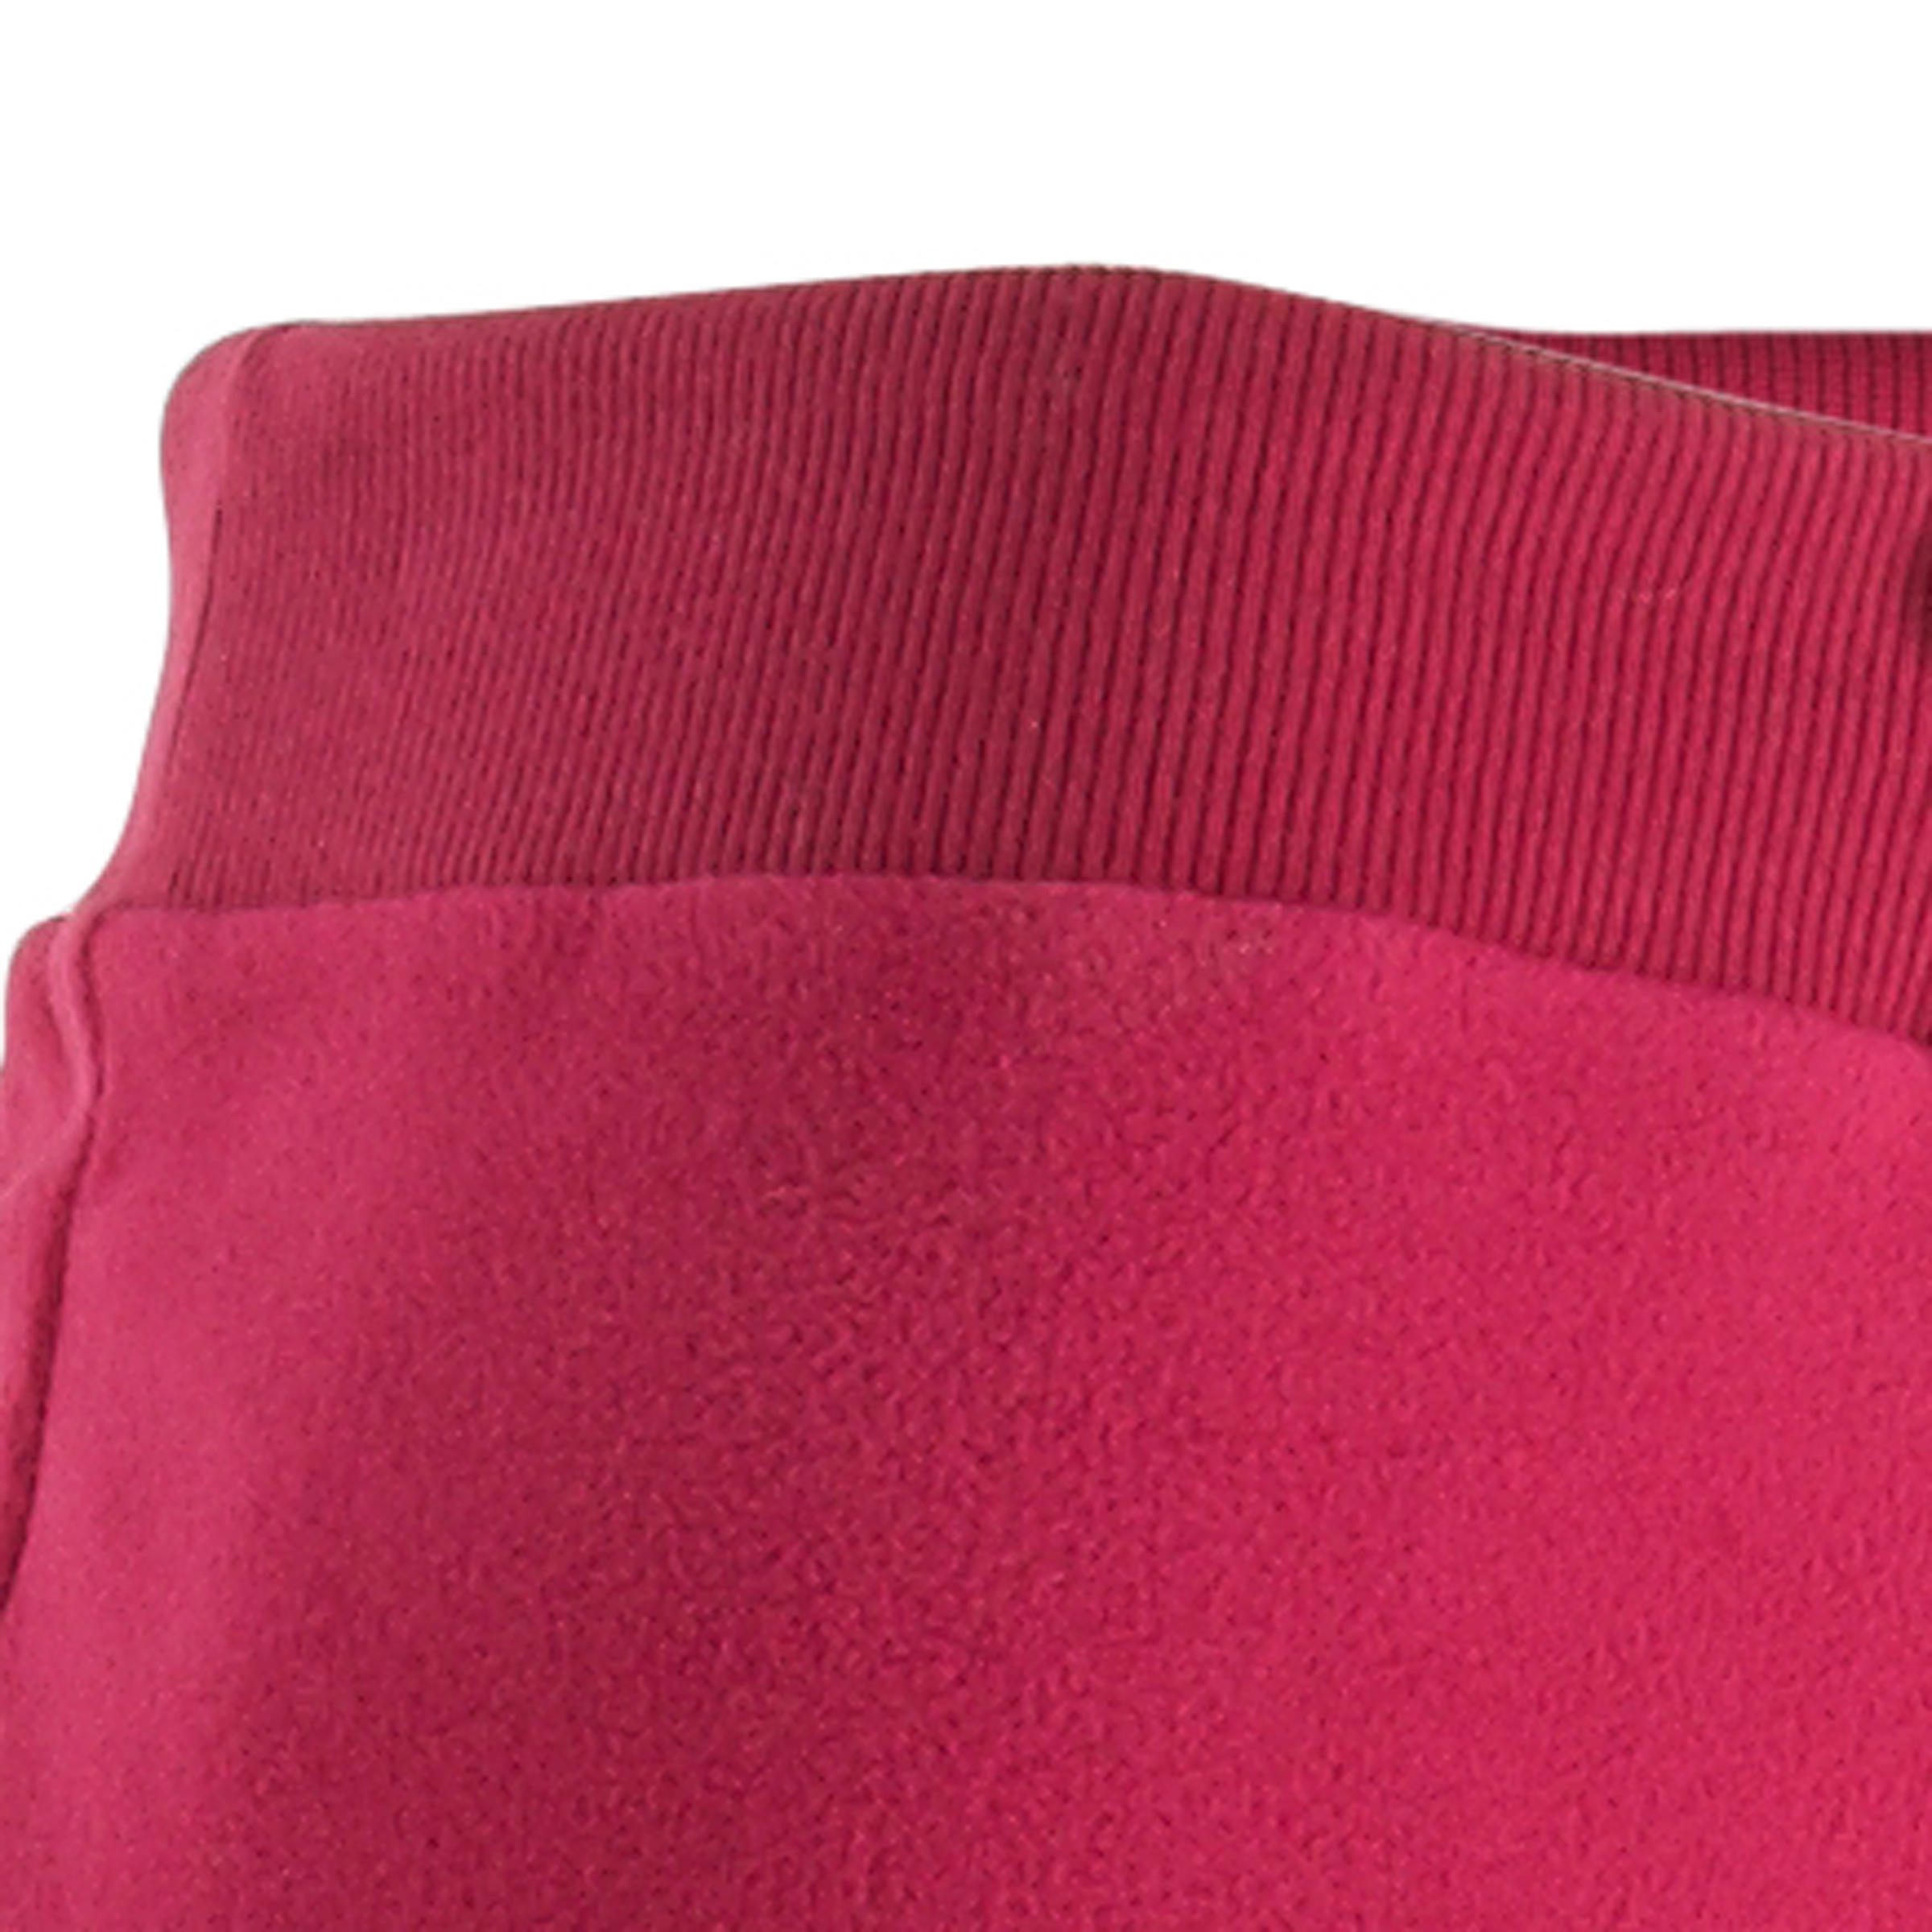 Forclaz 50 women's fleece hiking tights - pink 4/7